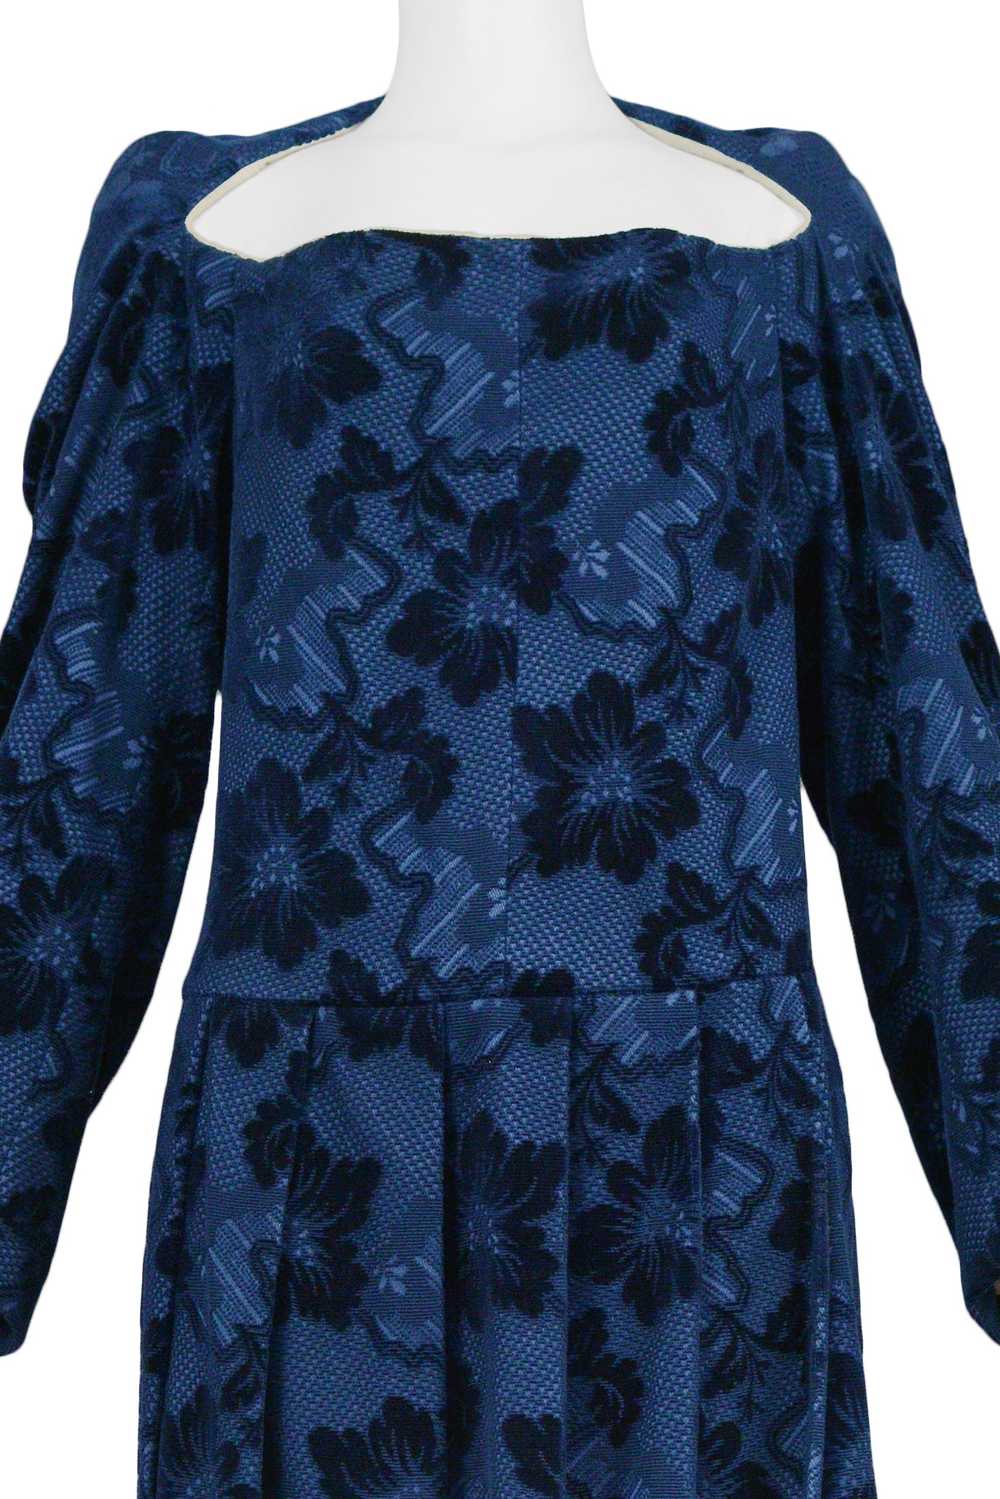 COMME DES GARCONS BLUE VELVET DEVORE FLORAL DRESS… - image 5